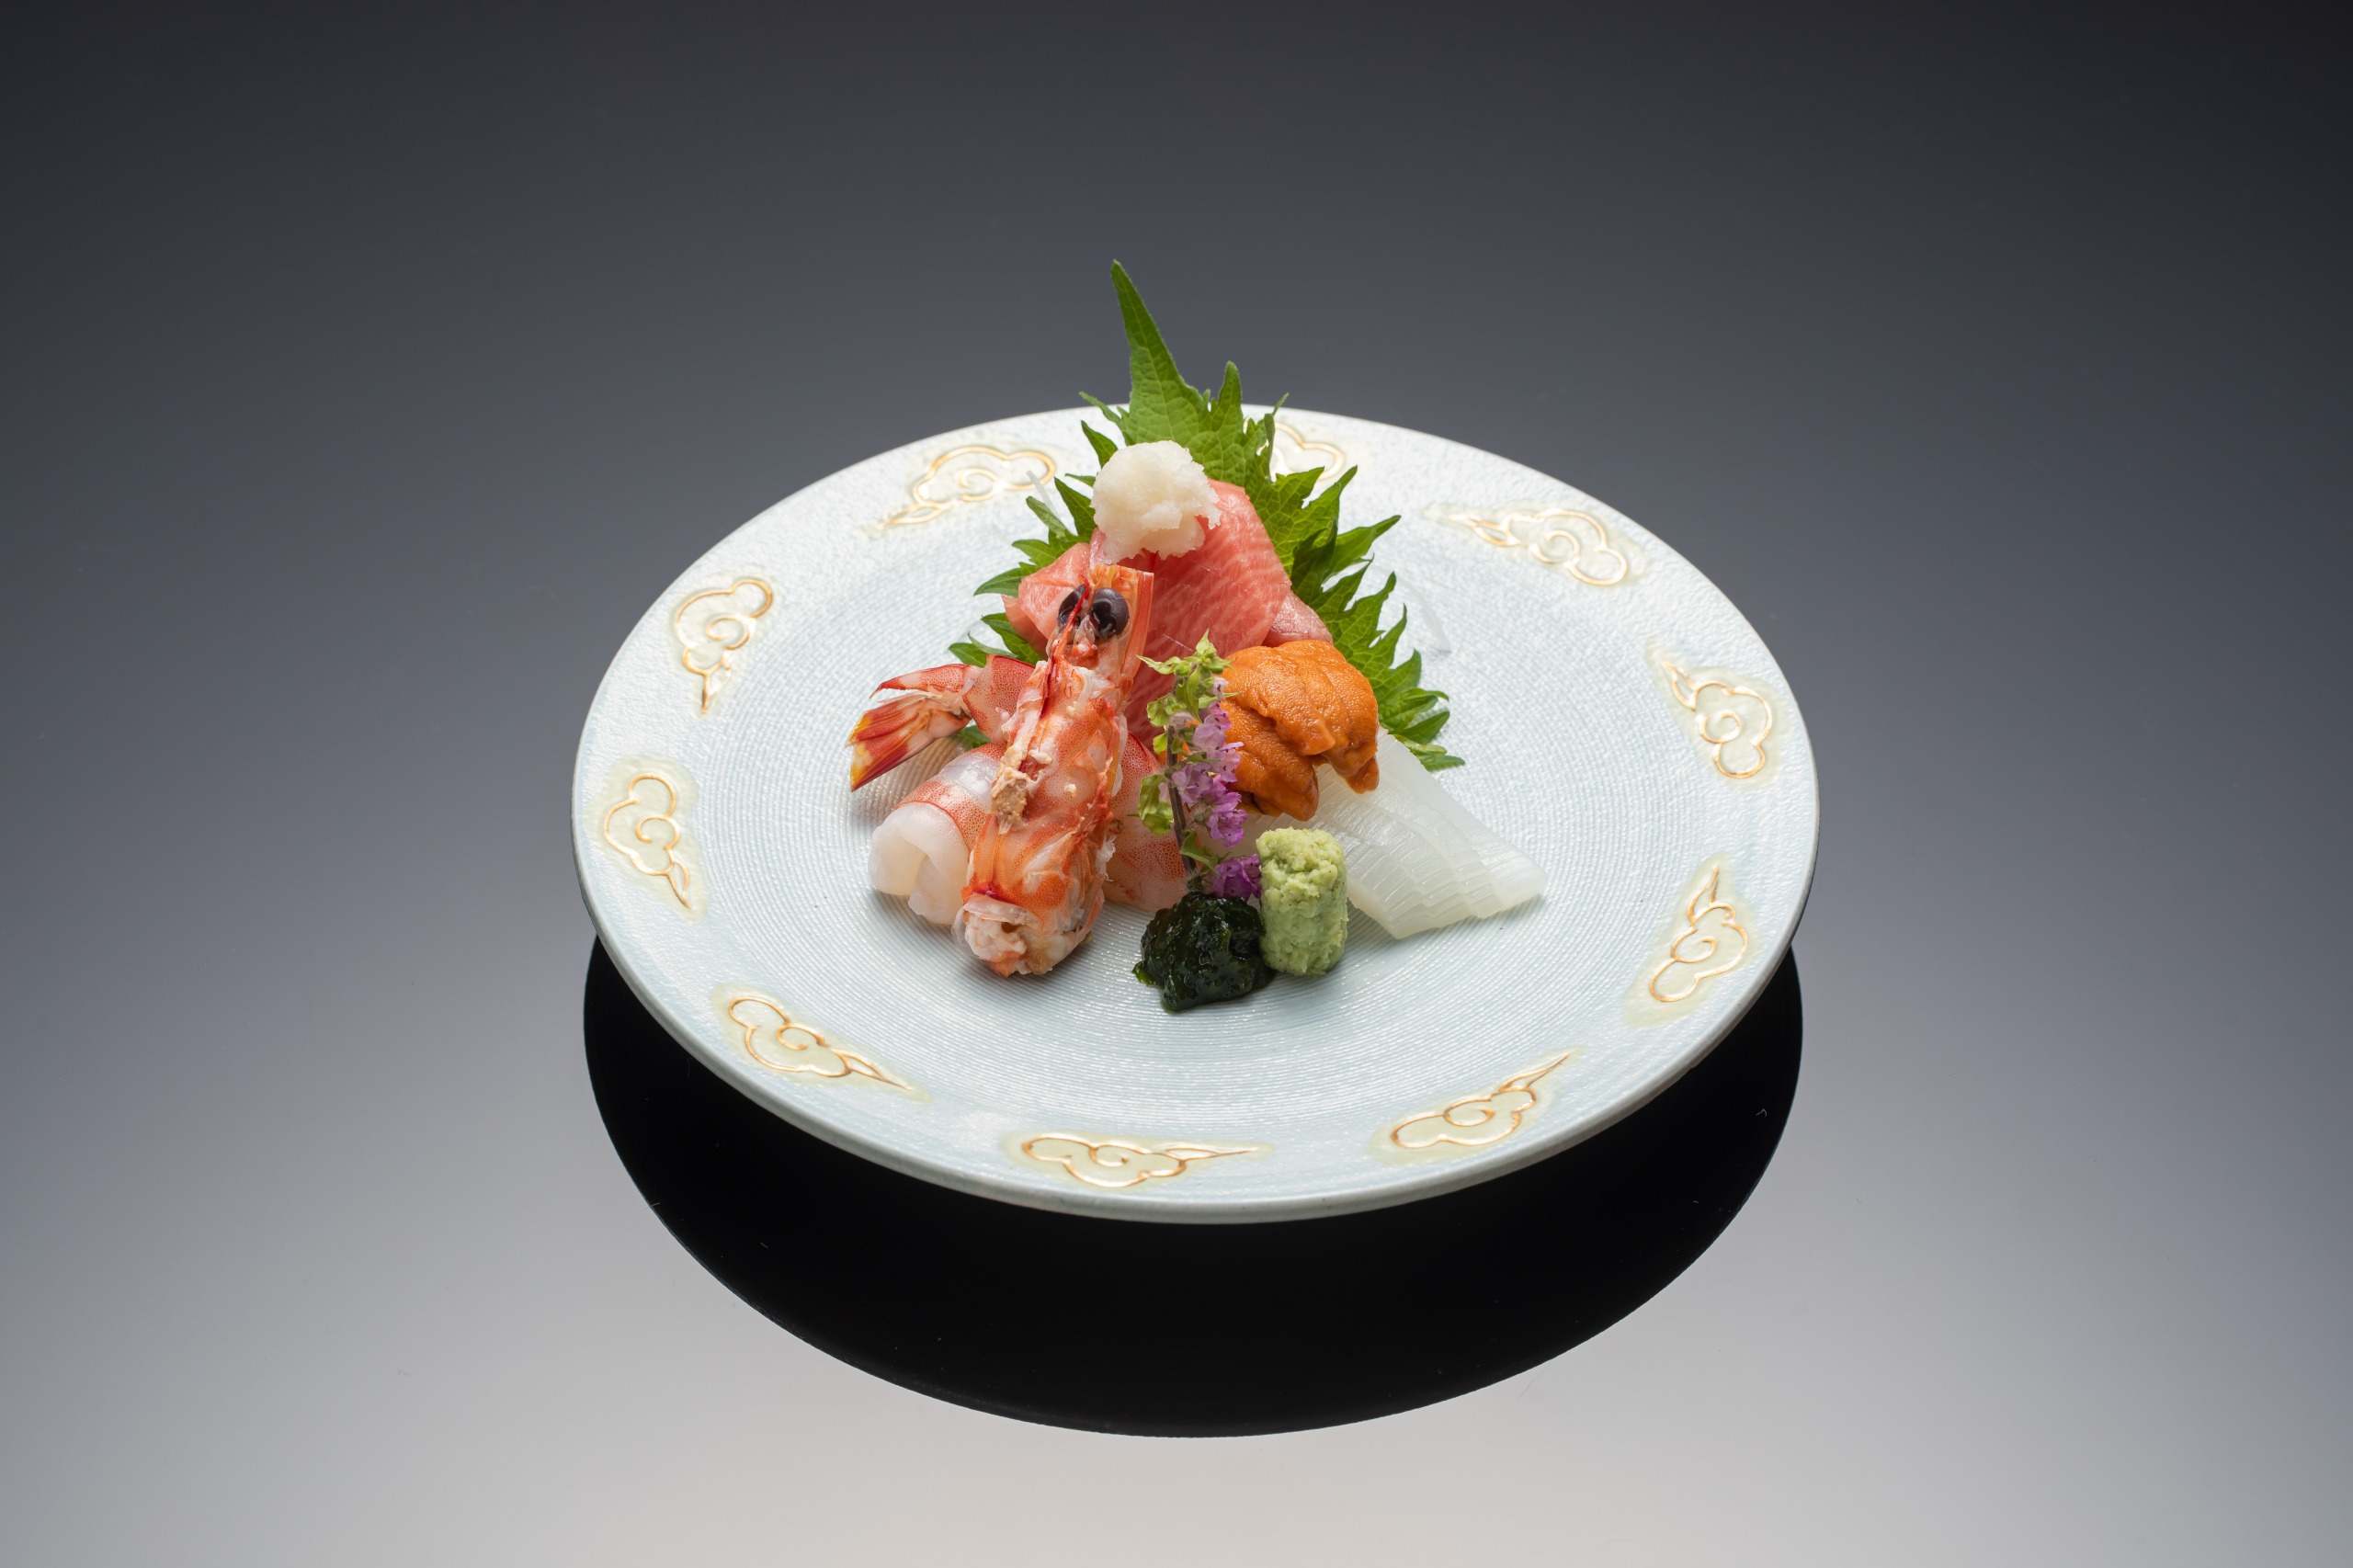 A popular Japanese Deep-fried dish “tempura“ by delicate craftsmanship